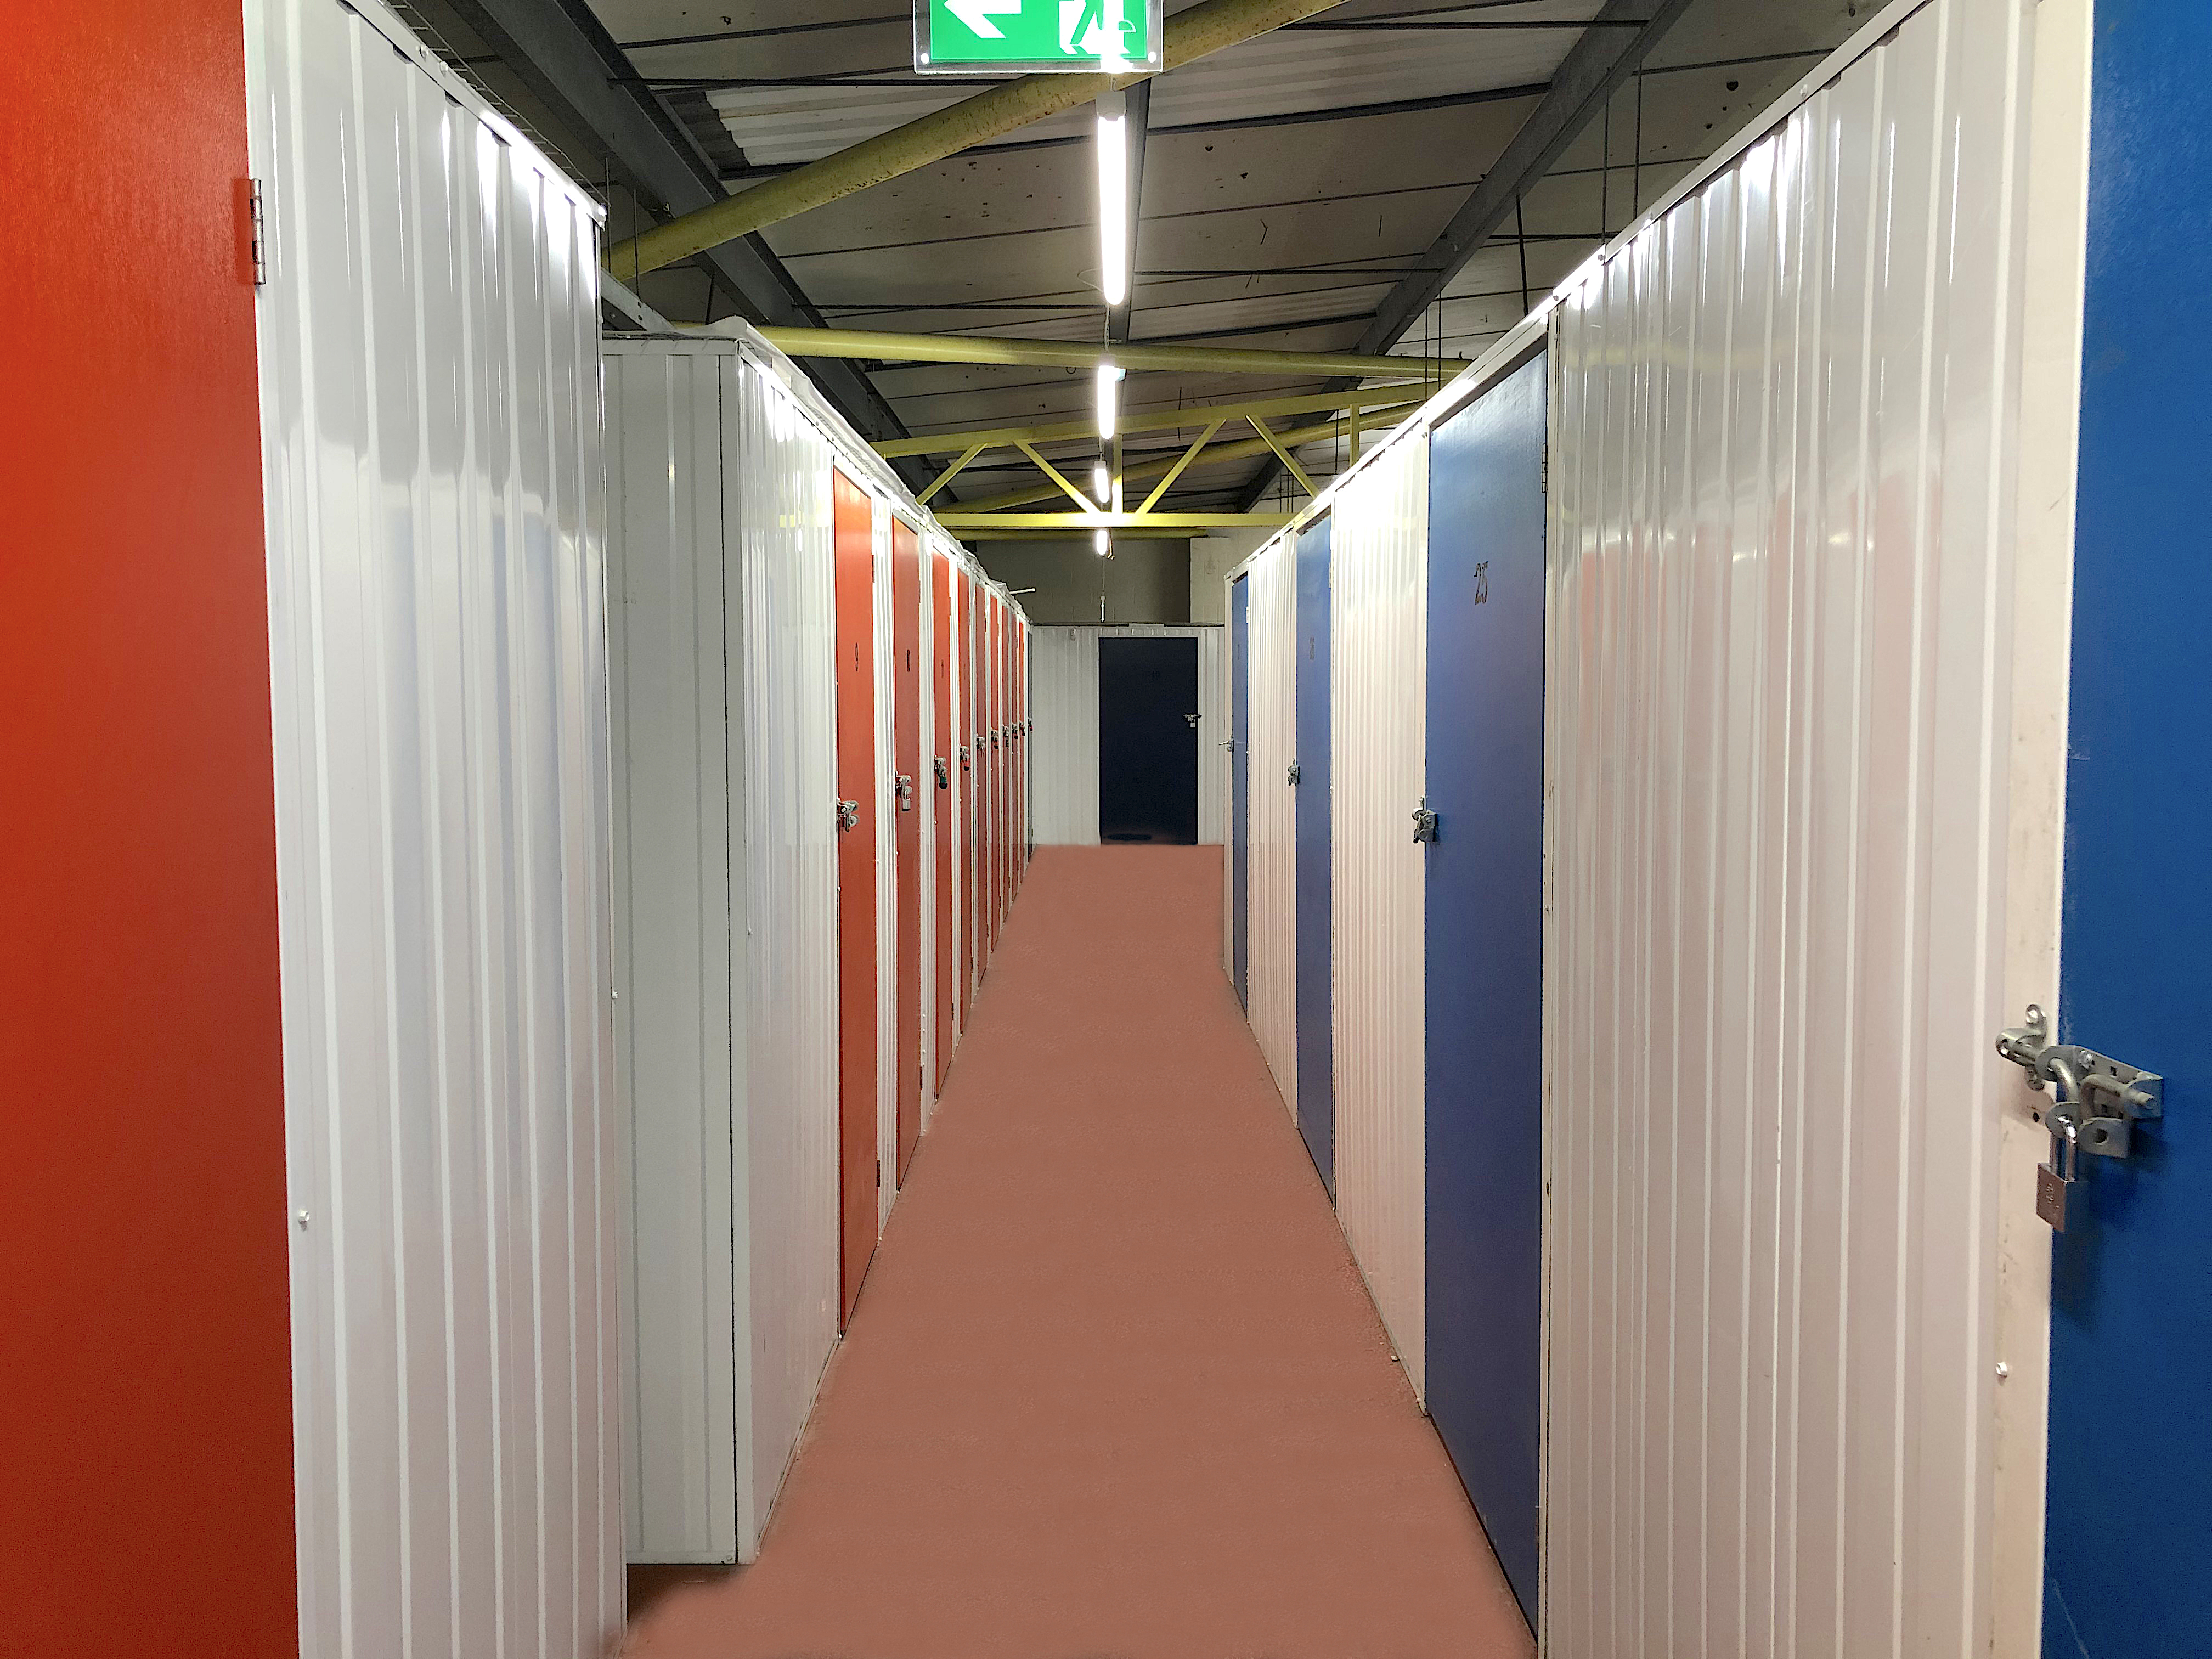 storage units